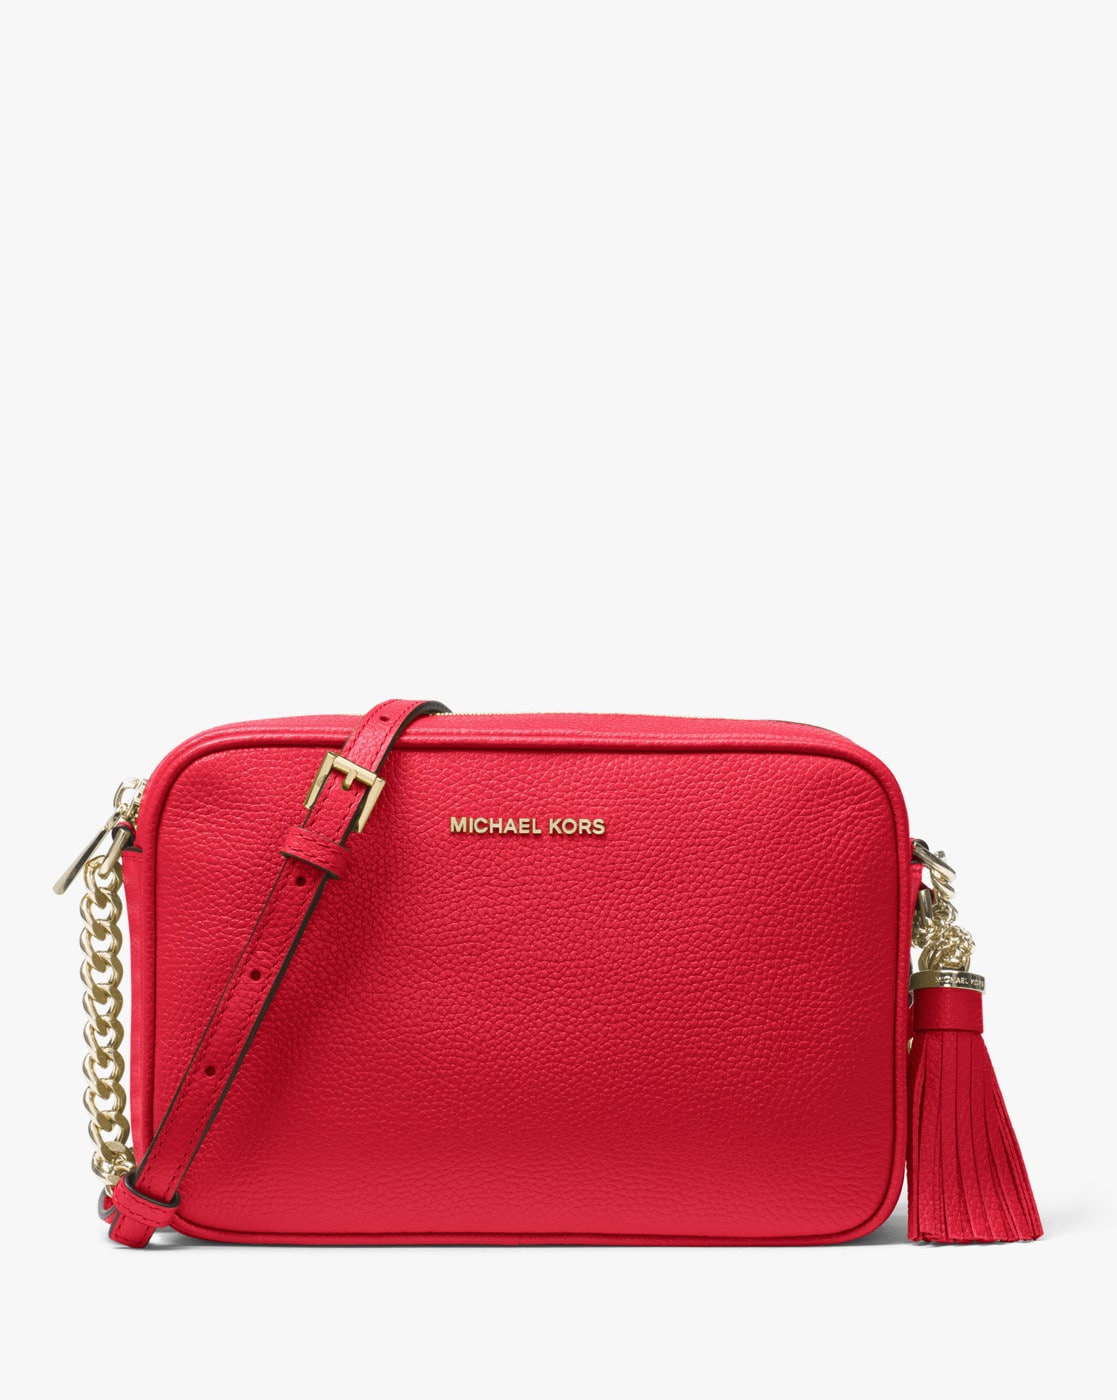 Handbags for Women by Michael Kors 